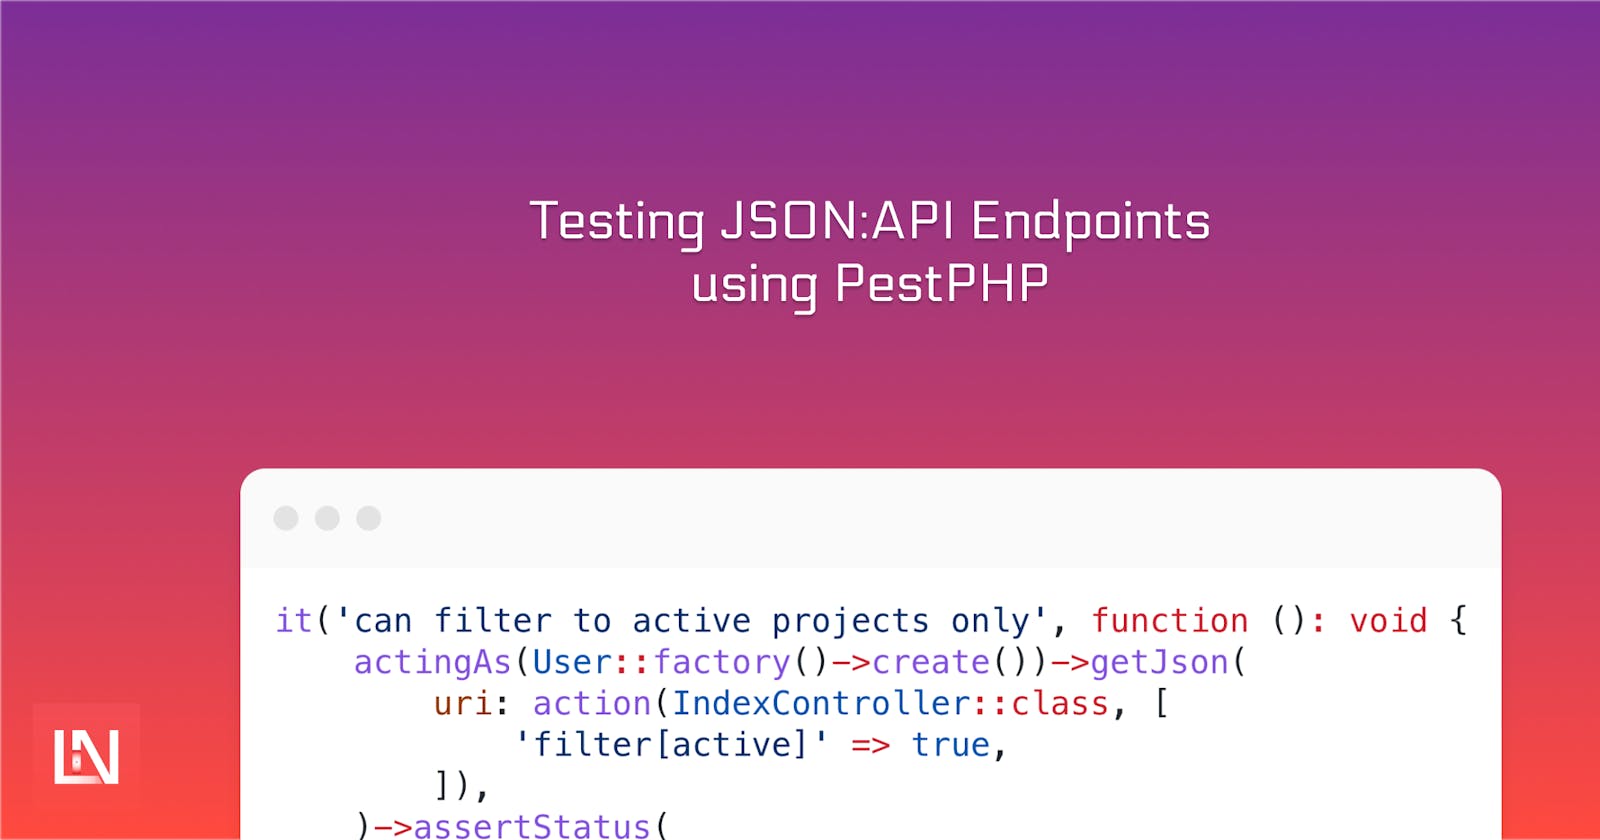 Testing JSON:API Endpoints with PestPHP